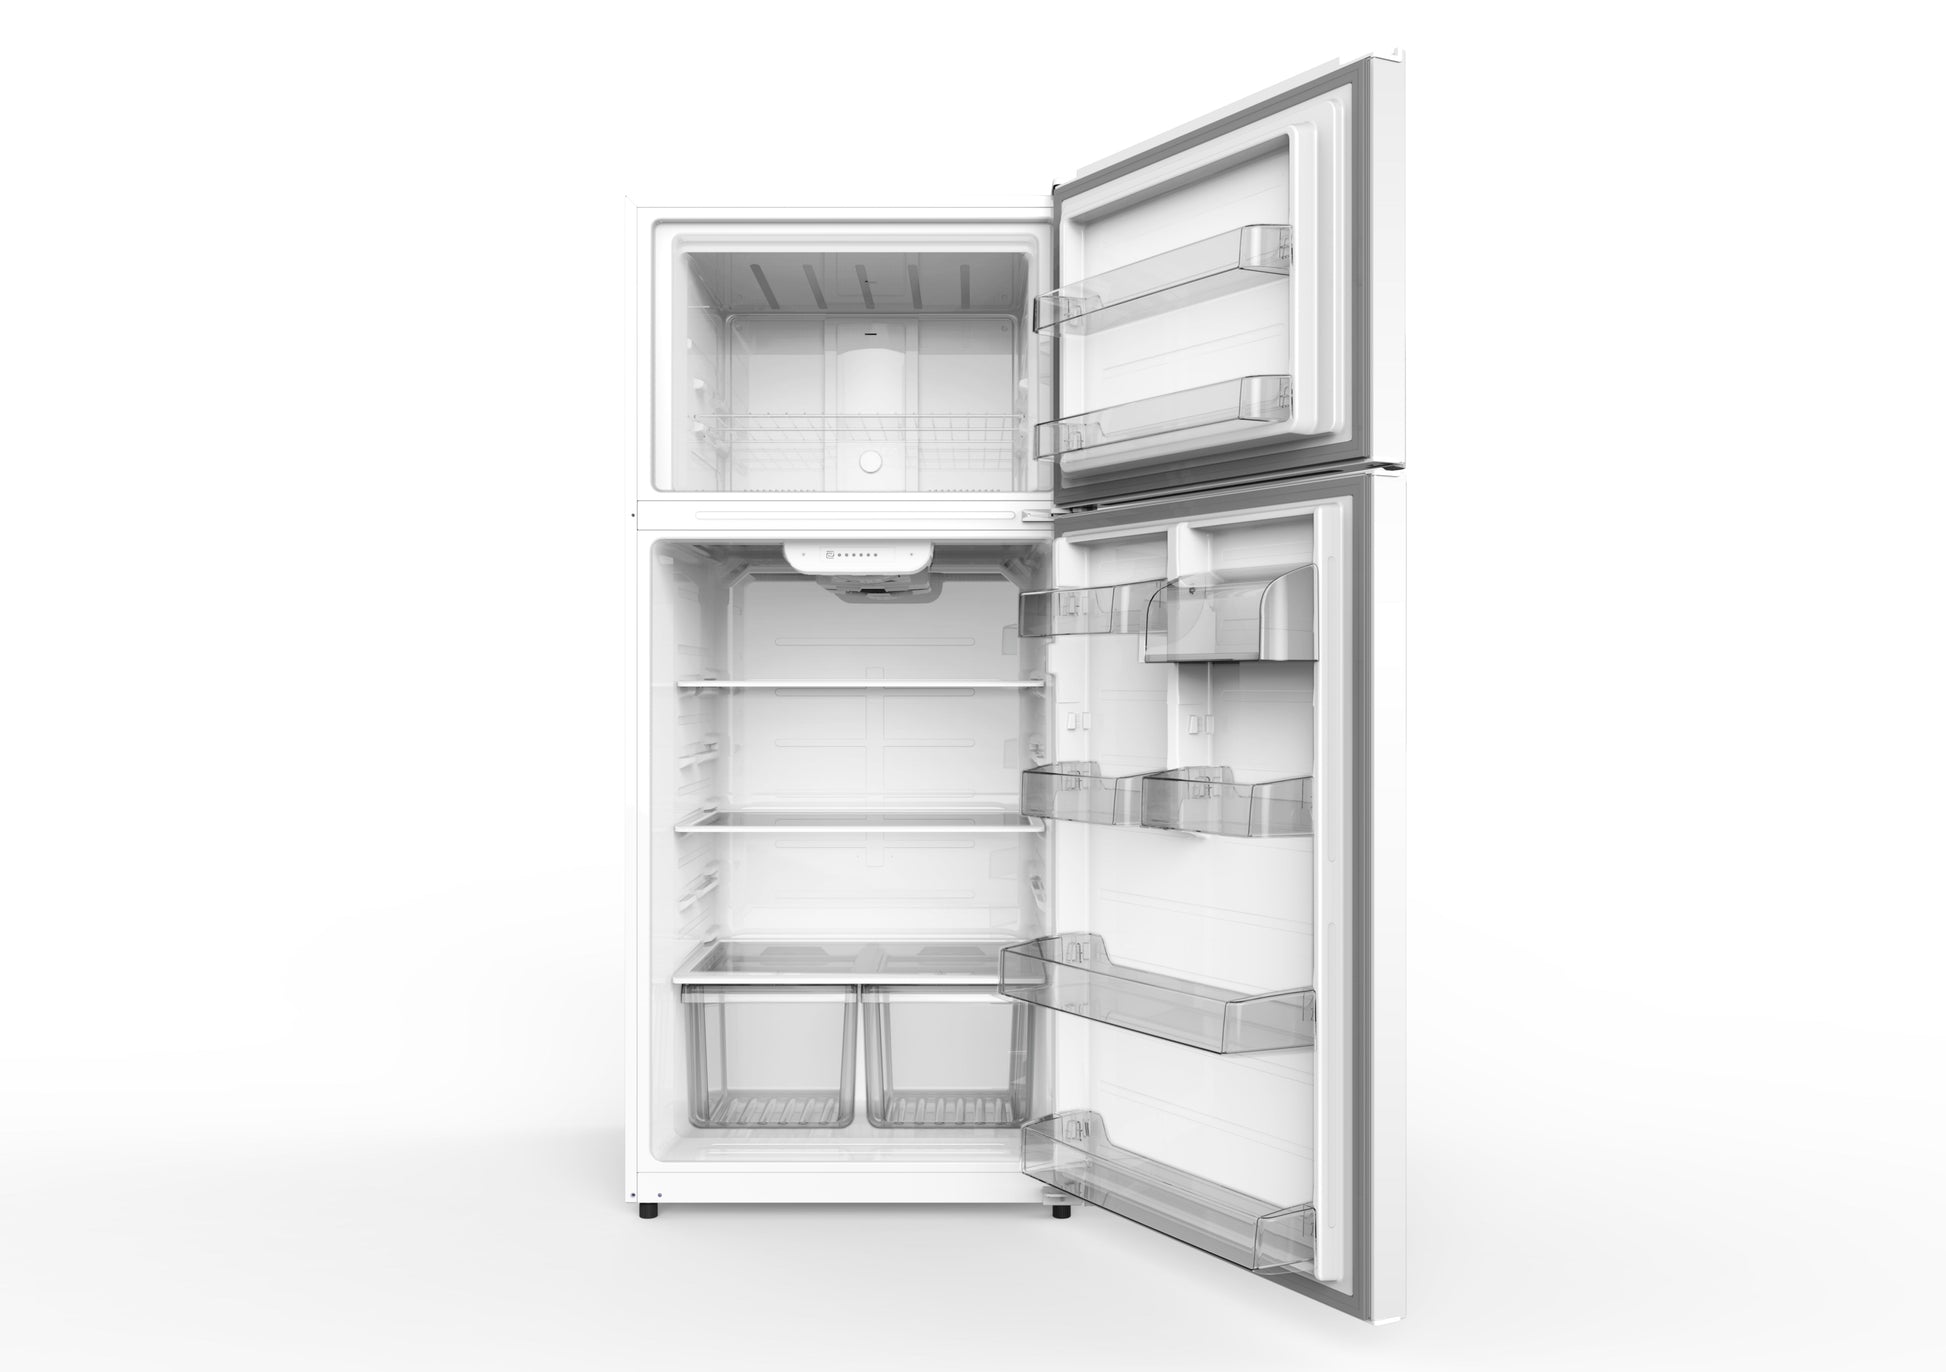 GE® Energy Star 18 Cu. Ft. Top-Freezer Refrigerator Black - GTE18FTLKBB